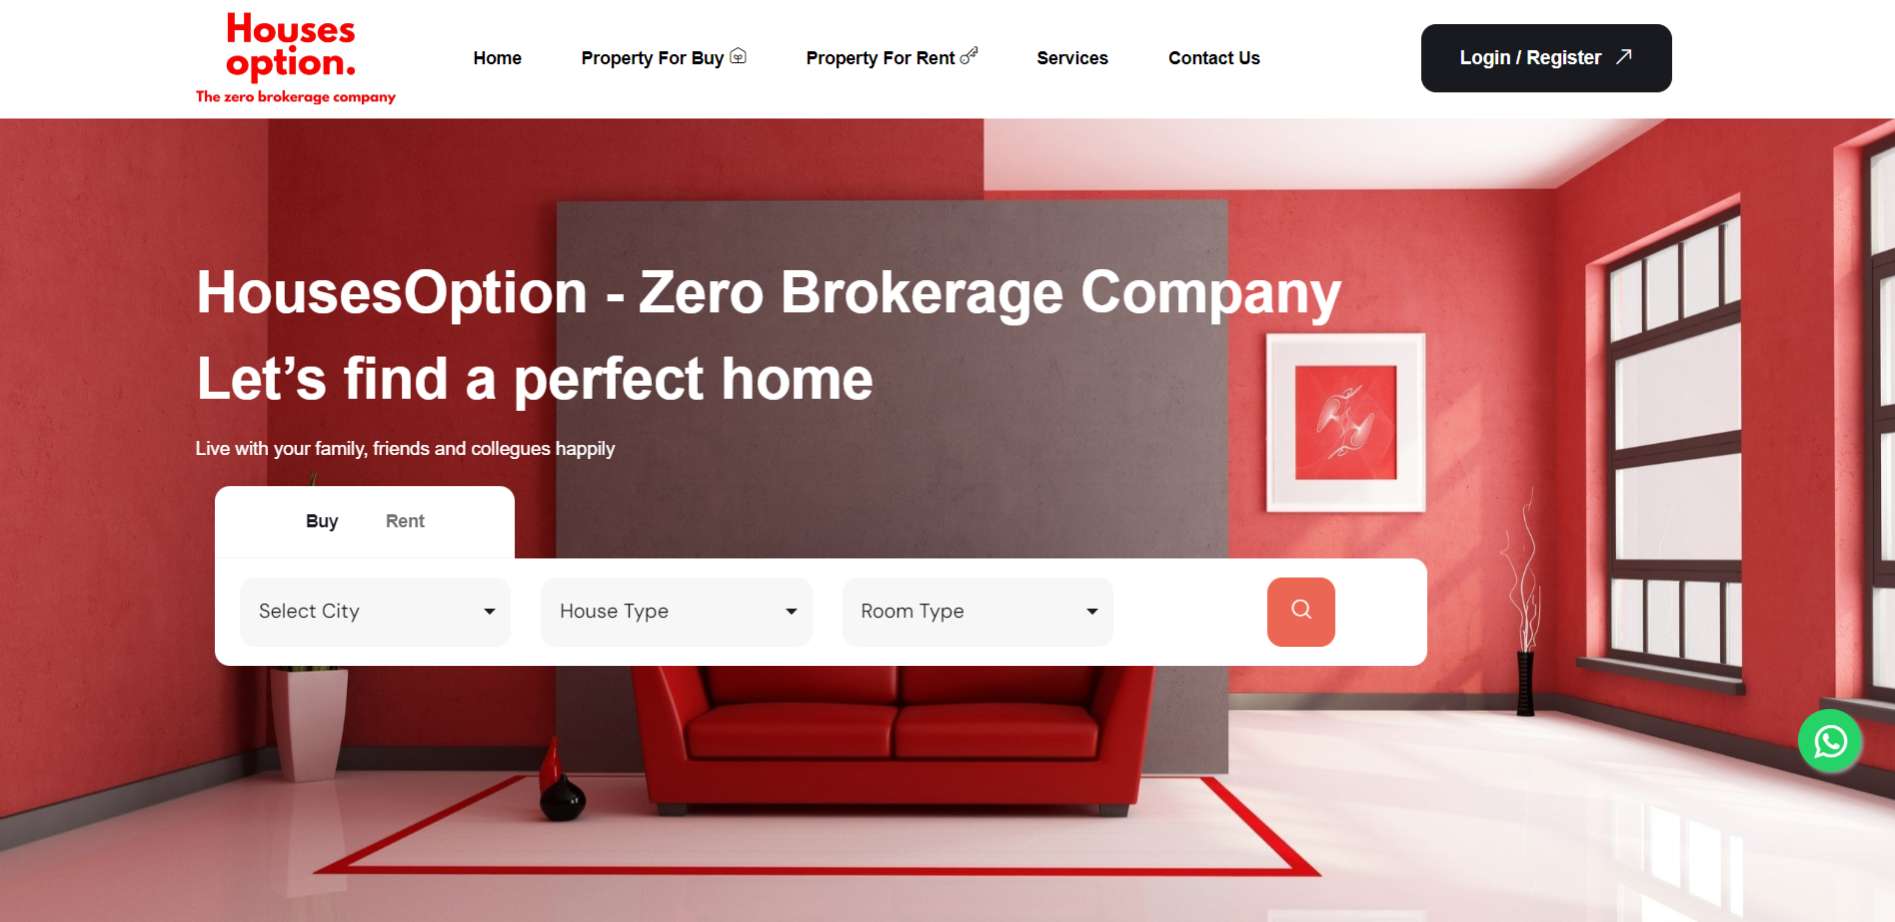 HousesOption - Zero Brokerage Property Company